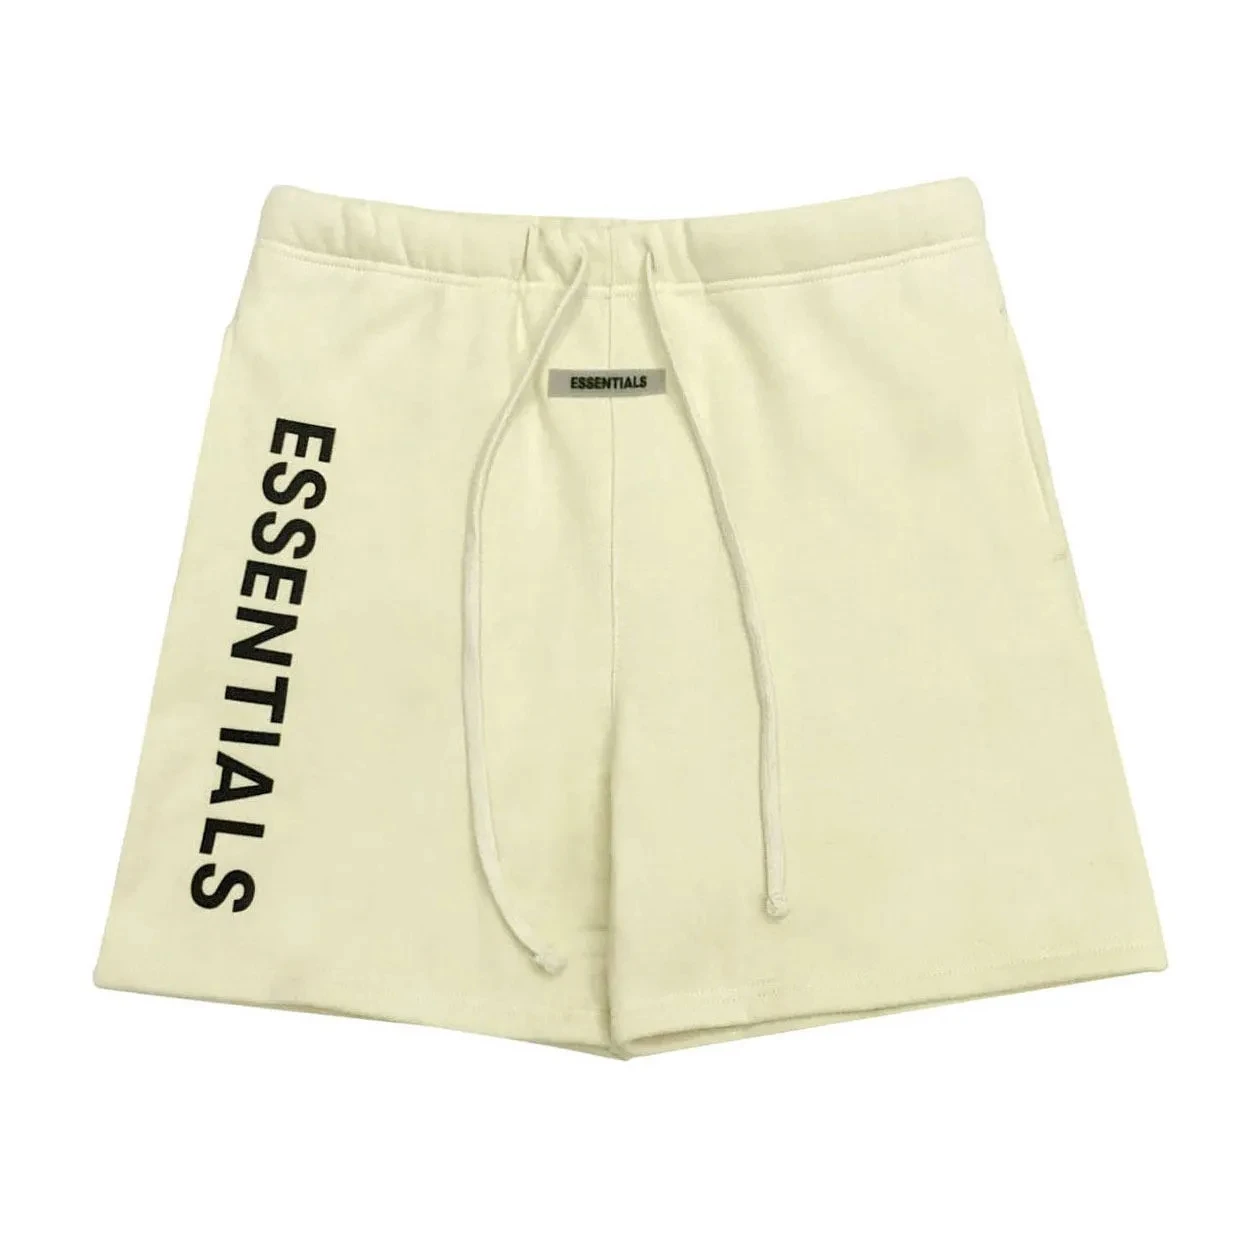 ESSENTIALS Luxury Men Shorts Board Casual Hip Hop Man Pants 3